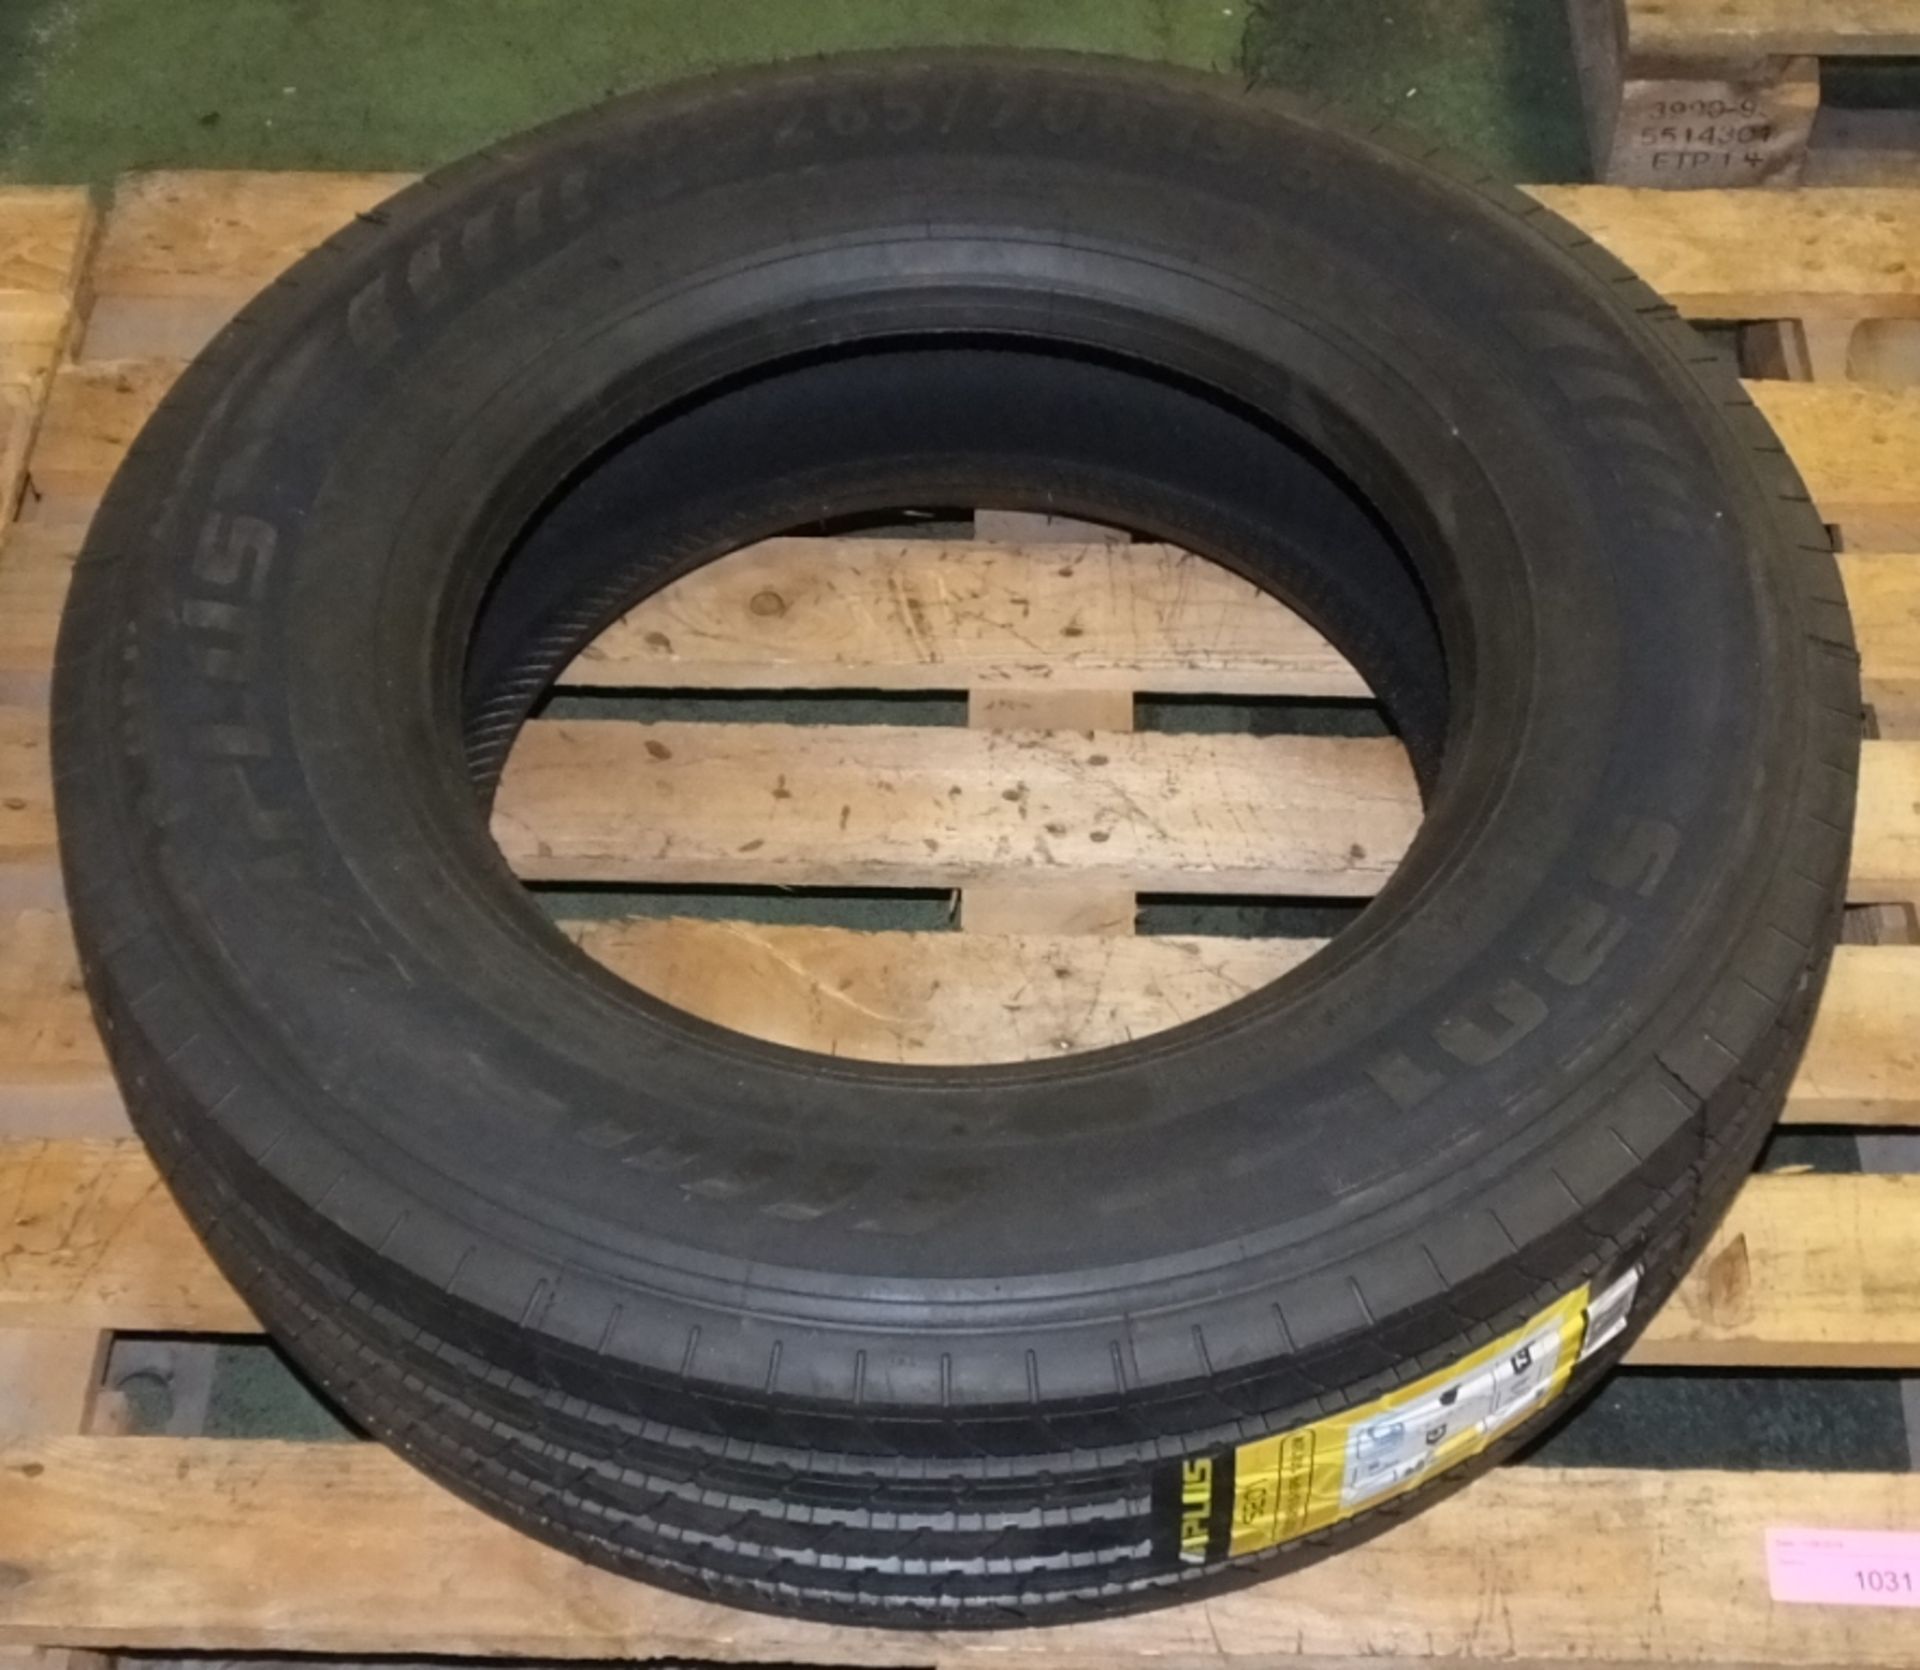 Alplus 265 / 70R 19.5 S201 tyre (new & unused) - Image 2 of 6